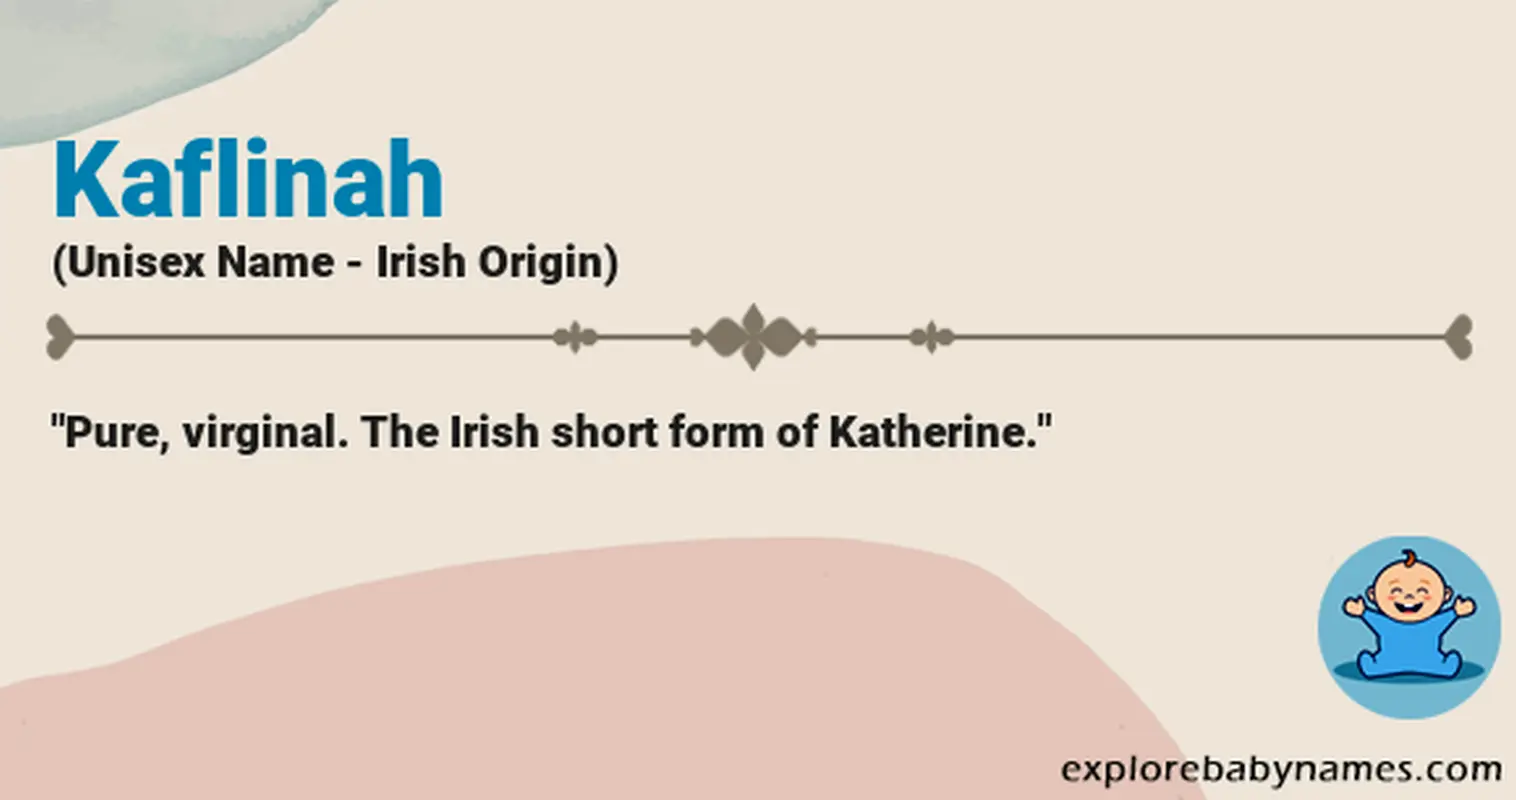 Meaning of Kaflinah